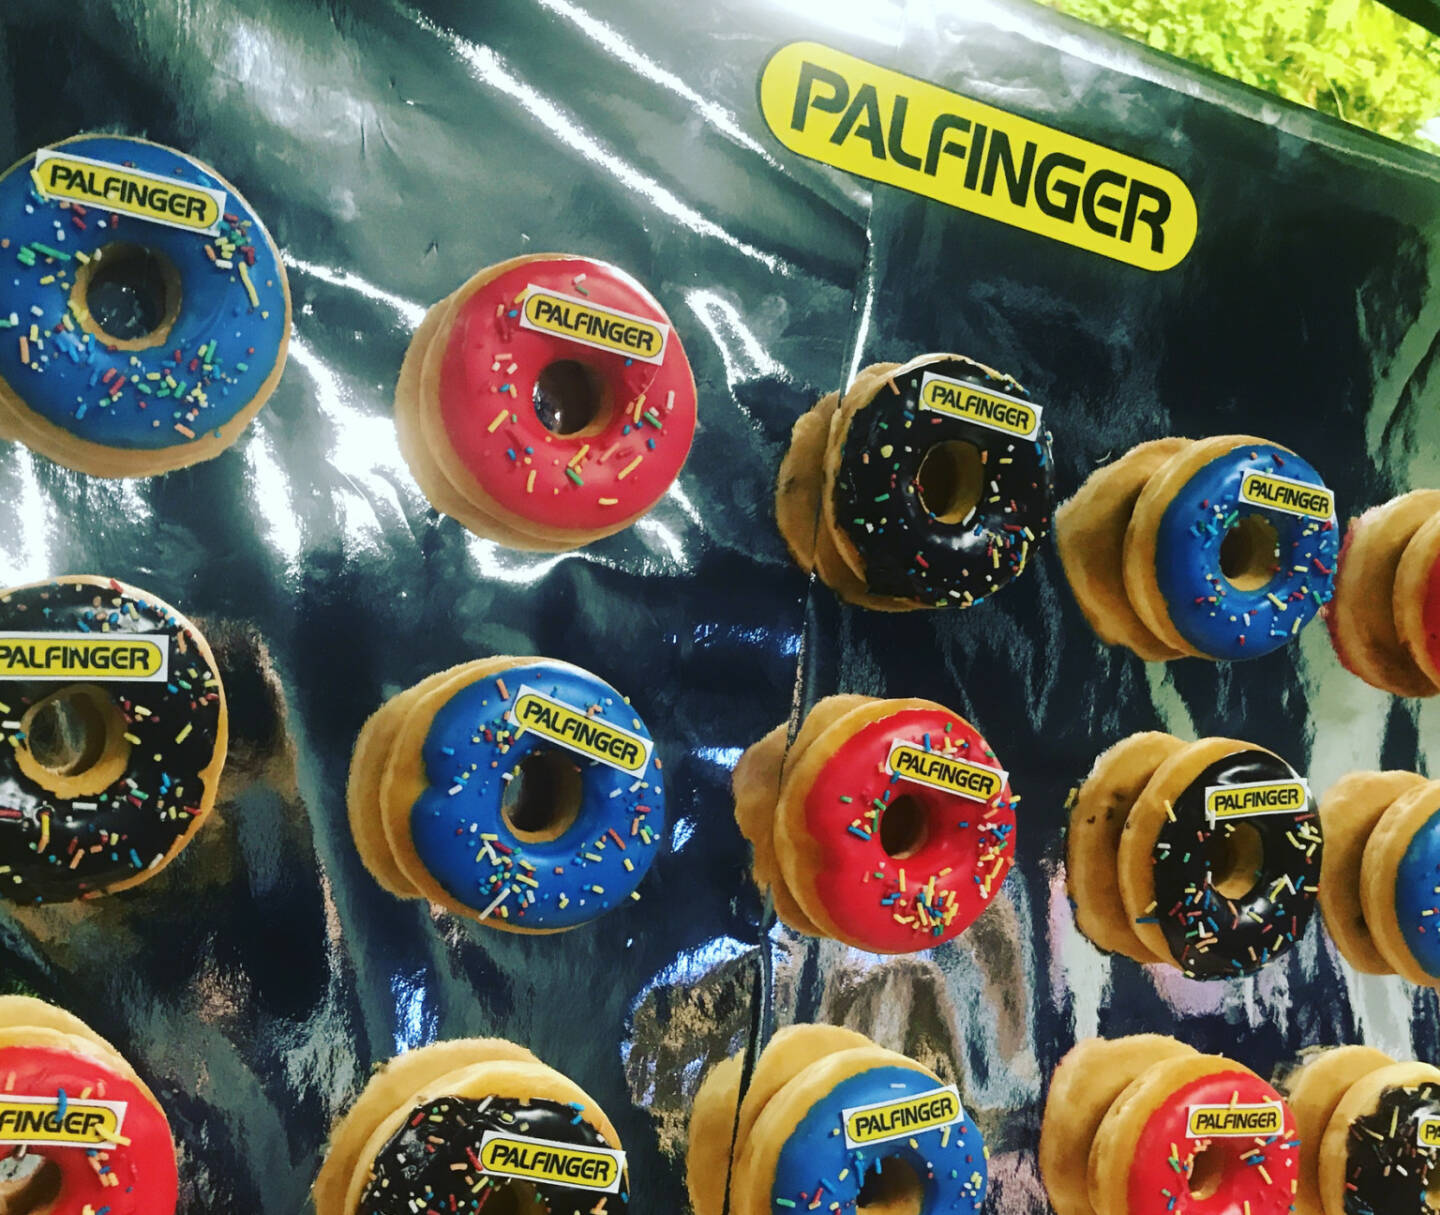 Palfinger Sweets